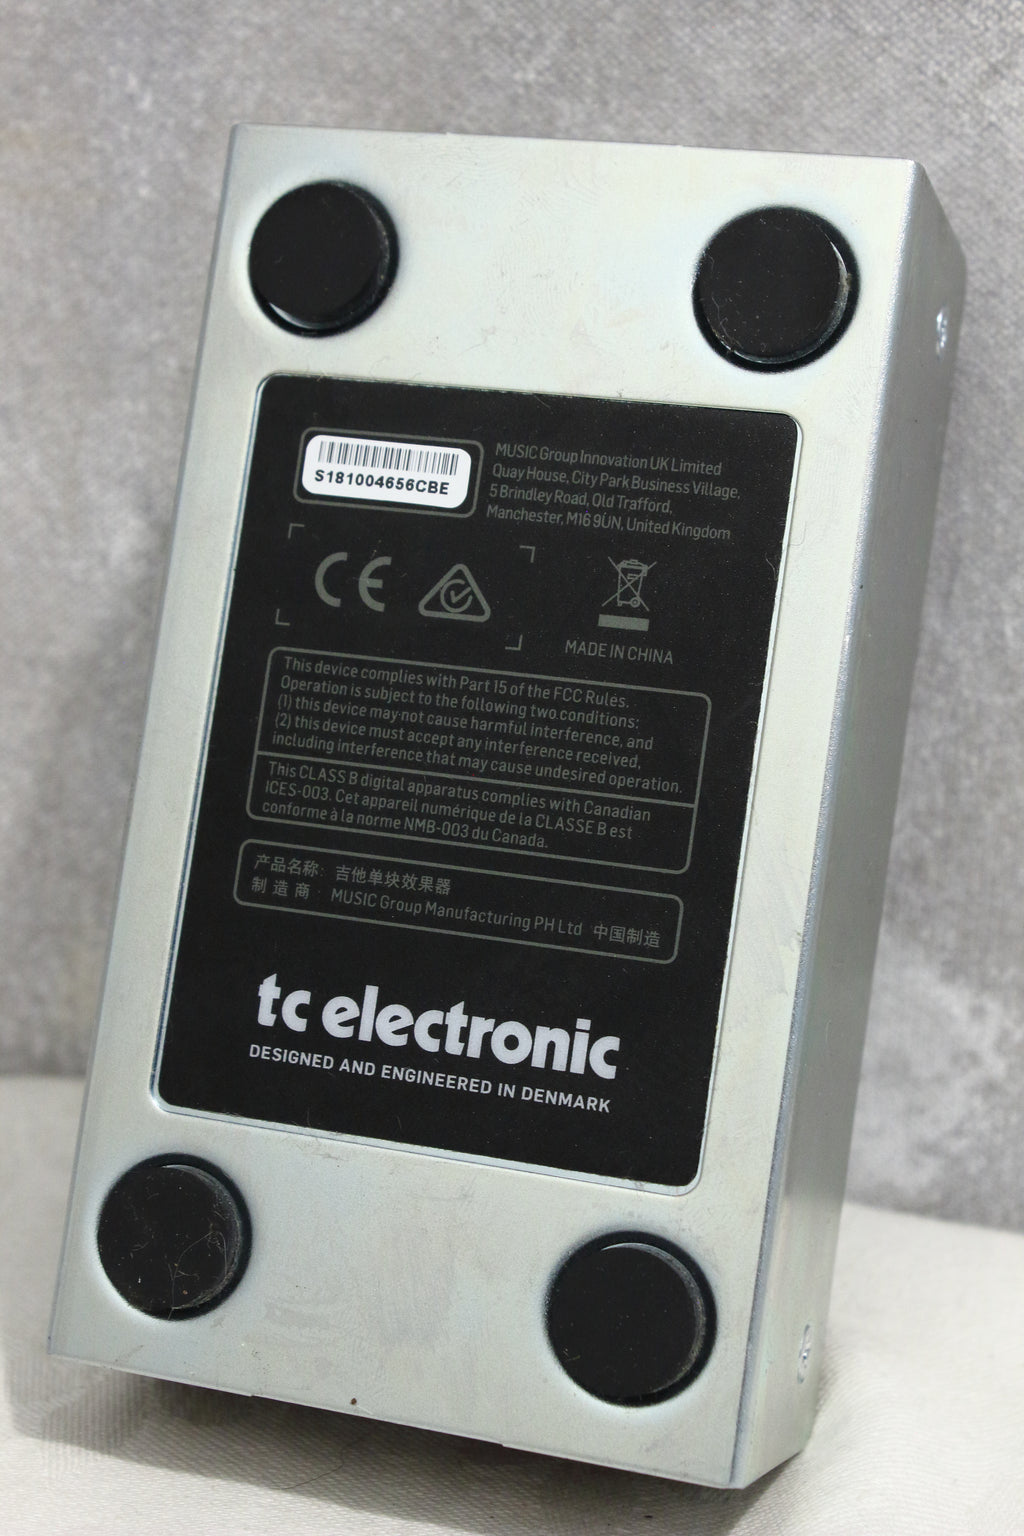 TC Electronic Echobrain Analog Delay Pedal